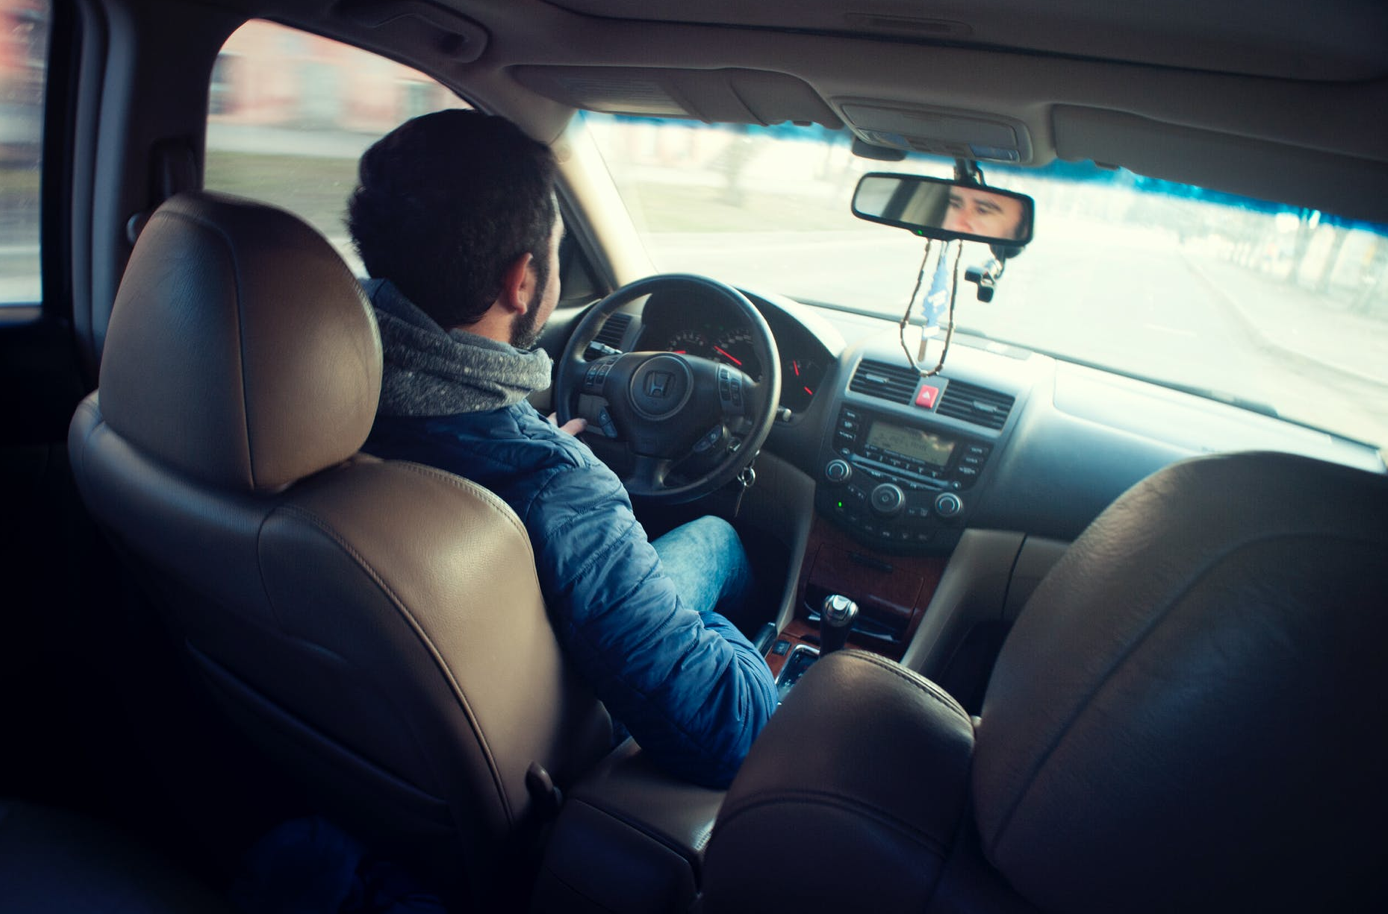 Man in blue jacket driving car; image by Alexandr Podvalny, via Pexels.com.